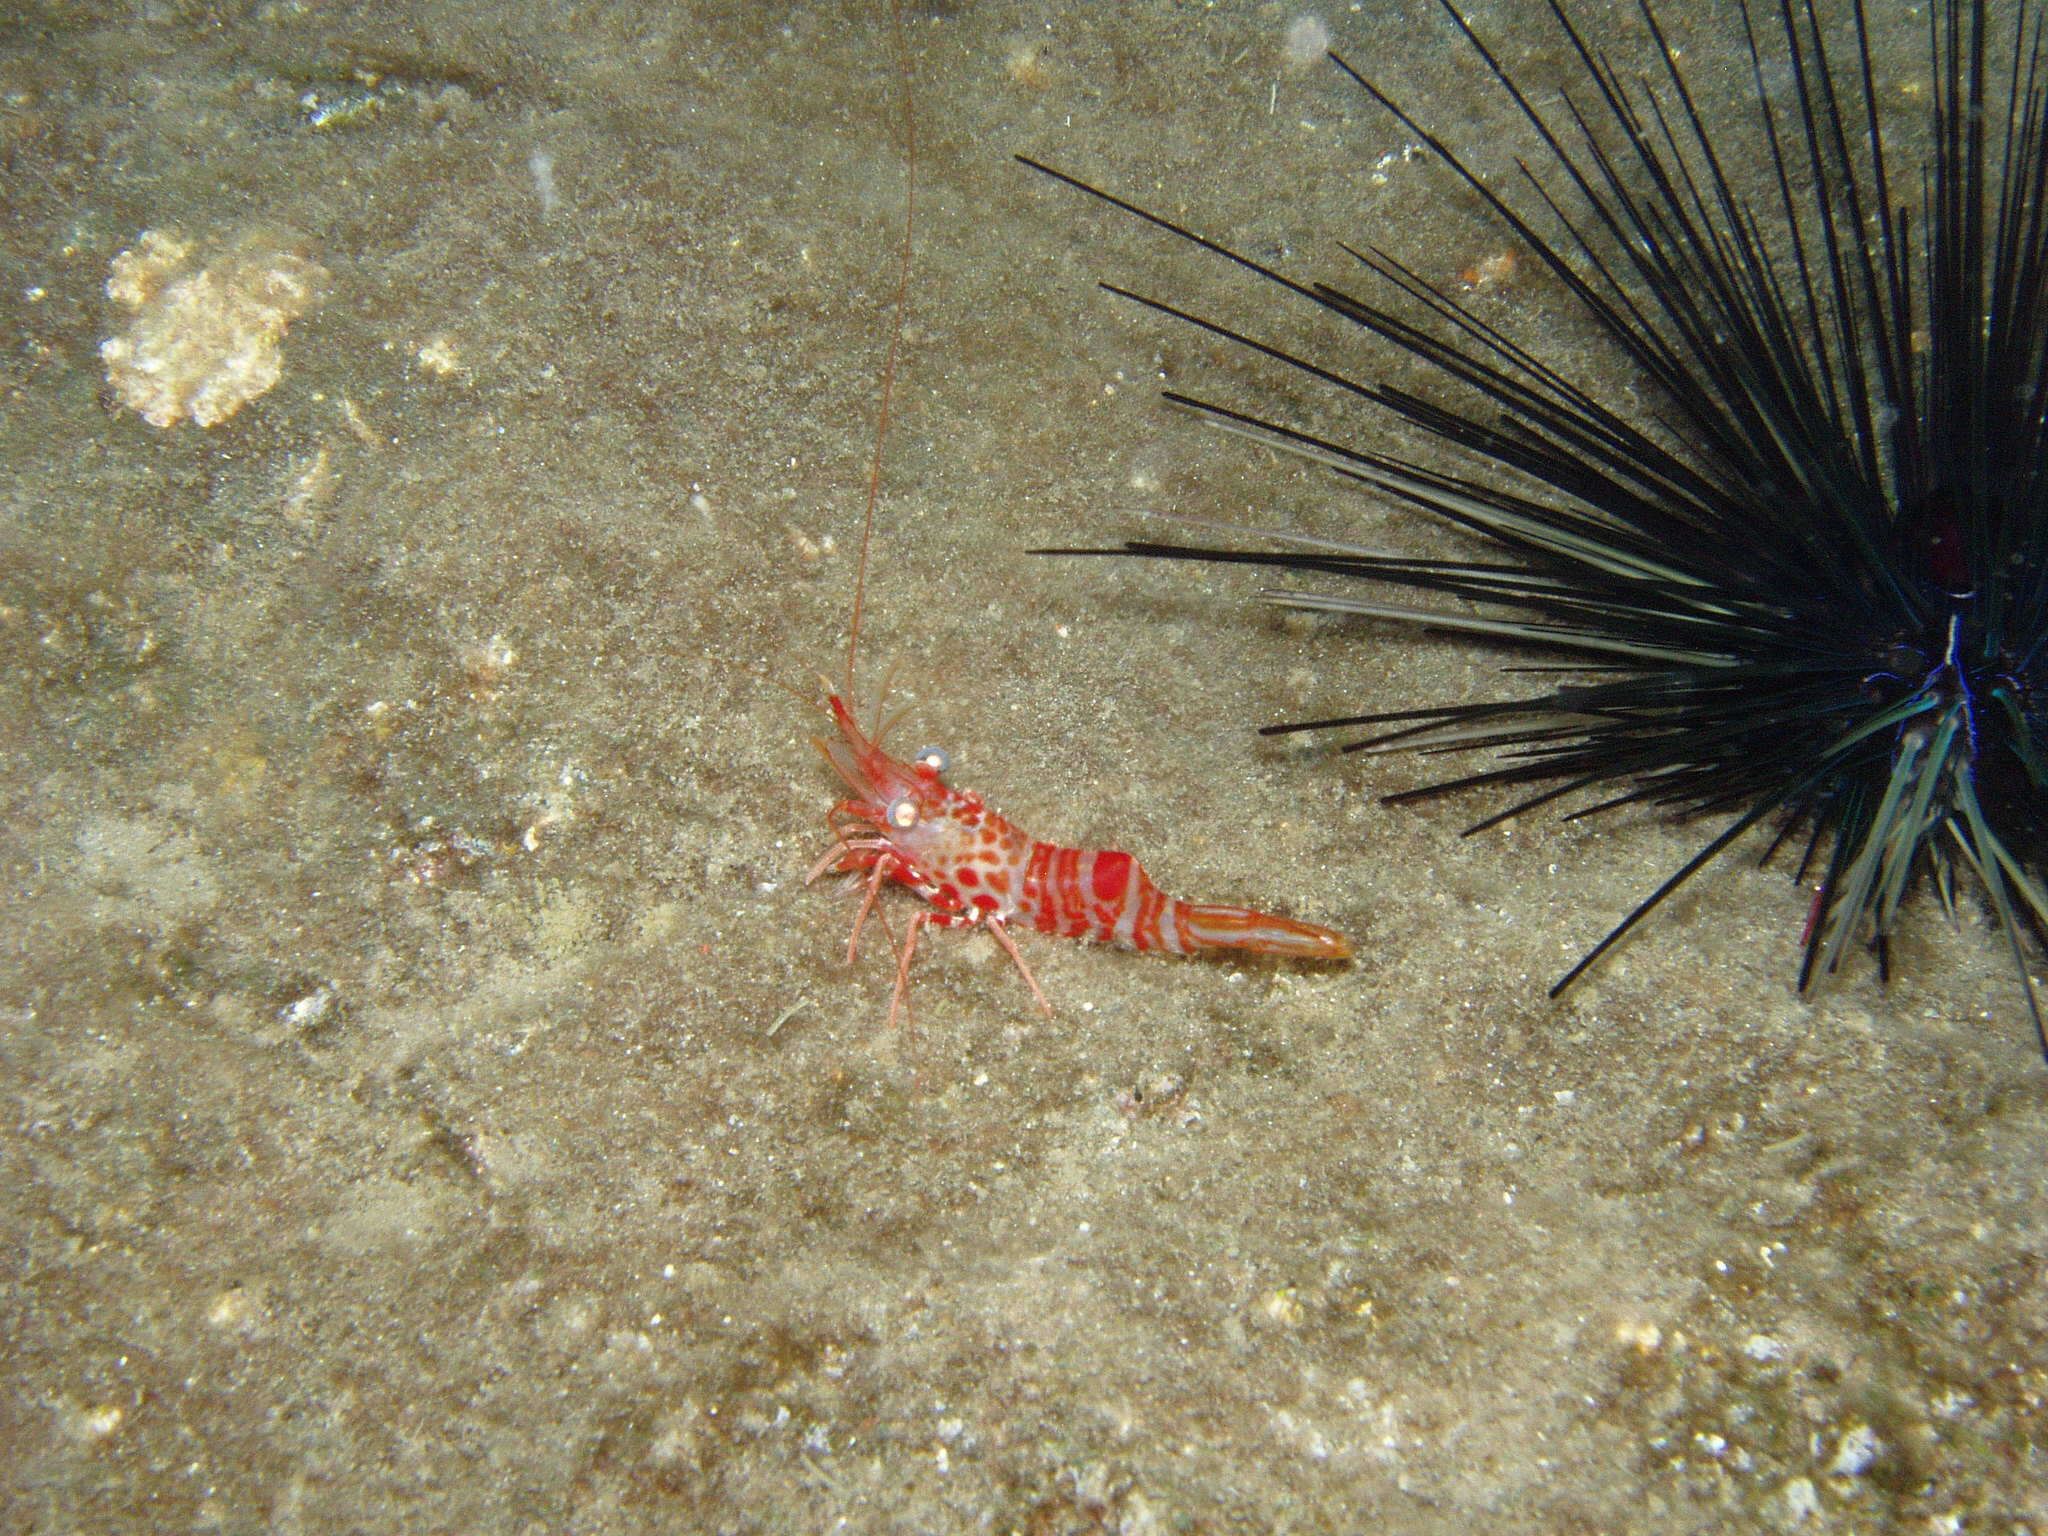 Image of mechanical shrimp